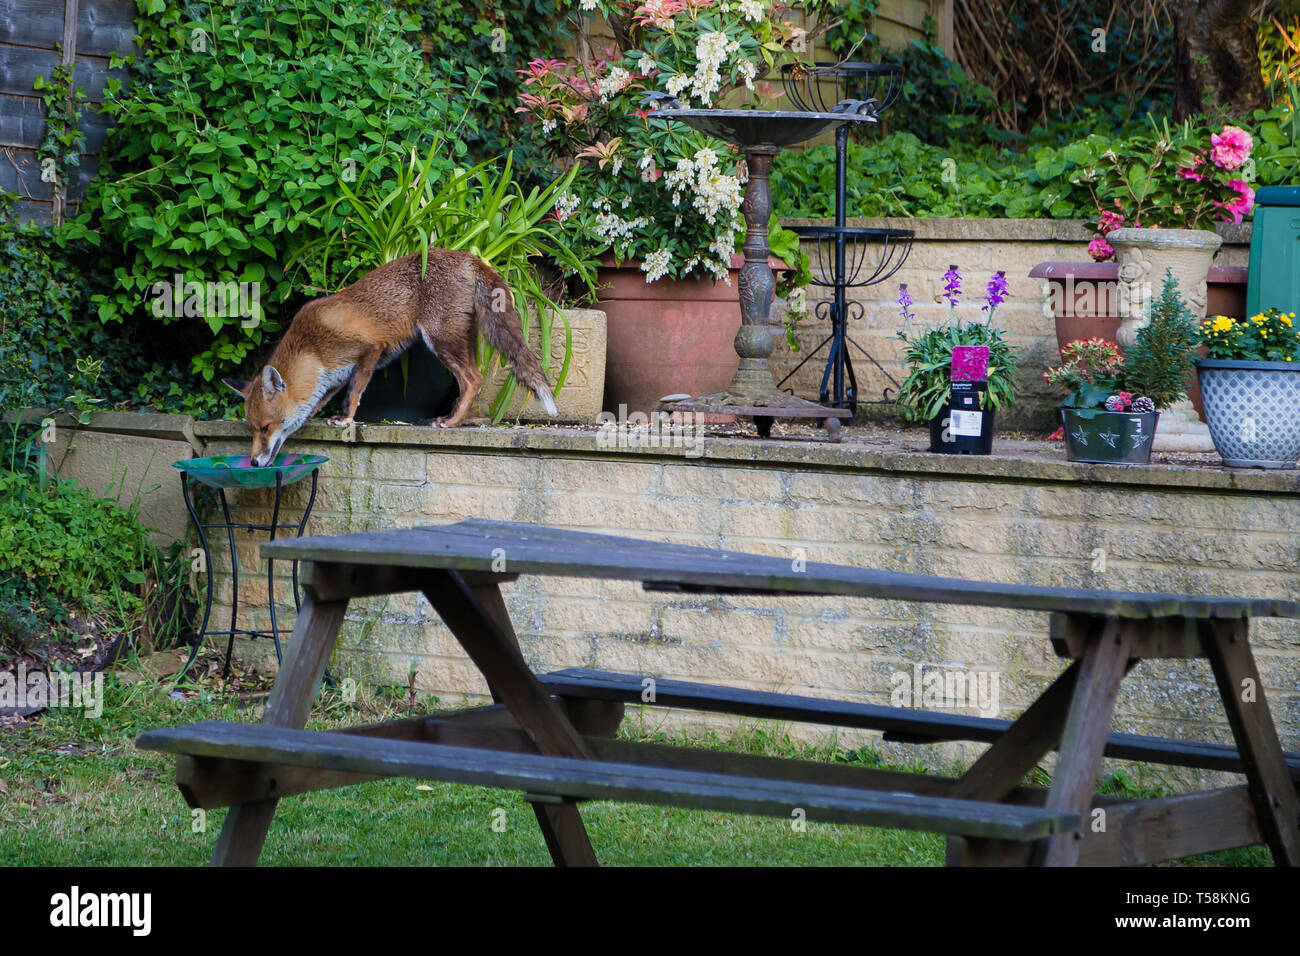 Gravesend, Kent, UK. A Fox takes a drink out of a bird bath in an English garden. Stock Photo